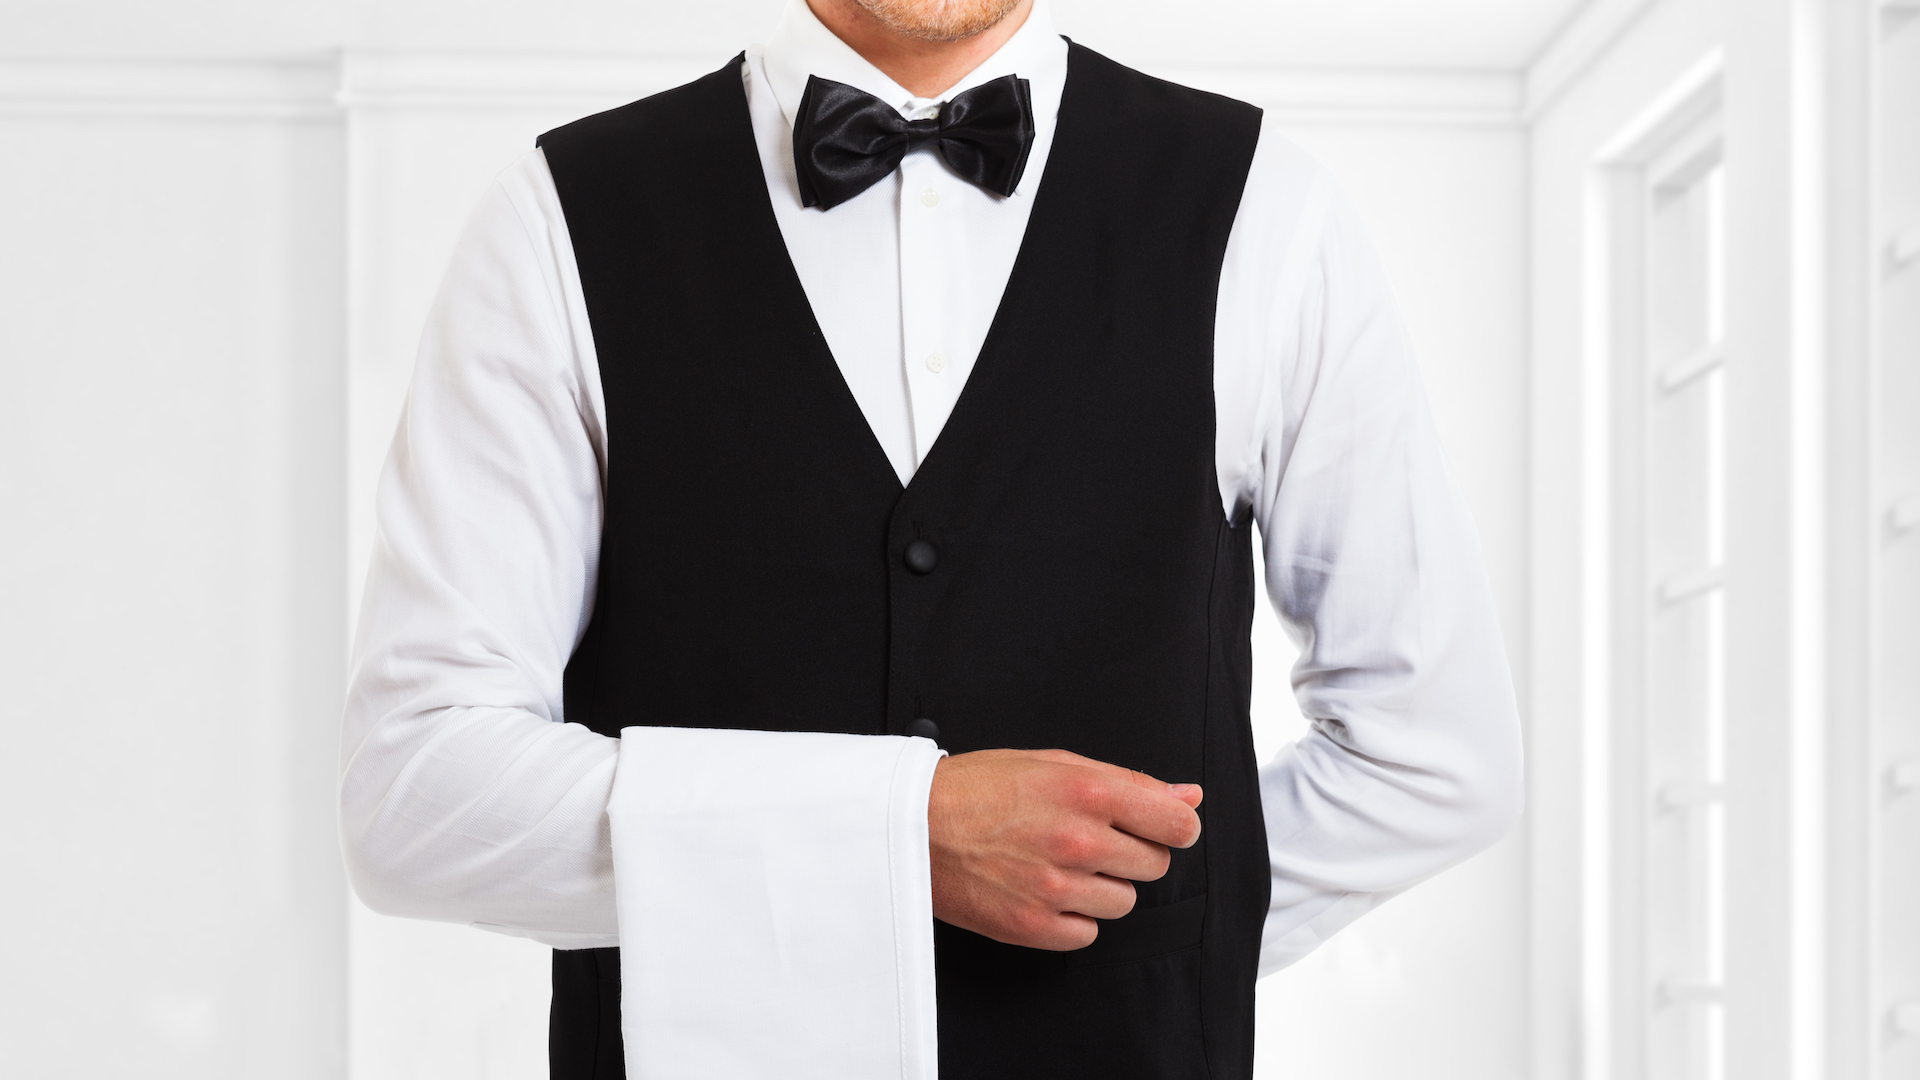 A waiter in a bowtie